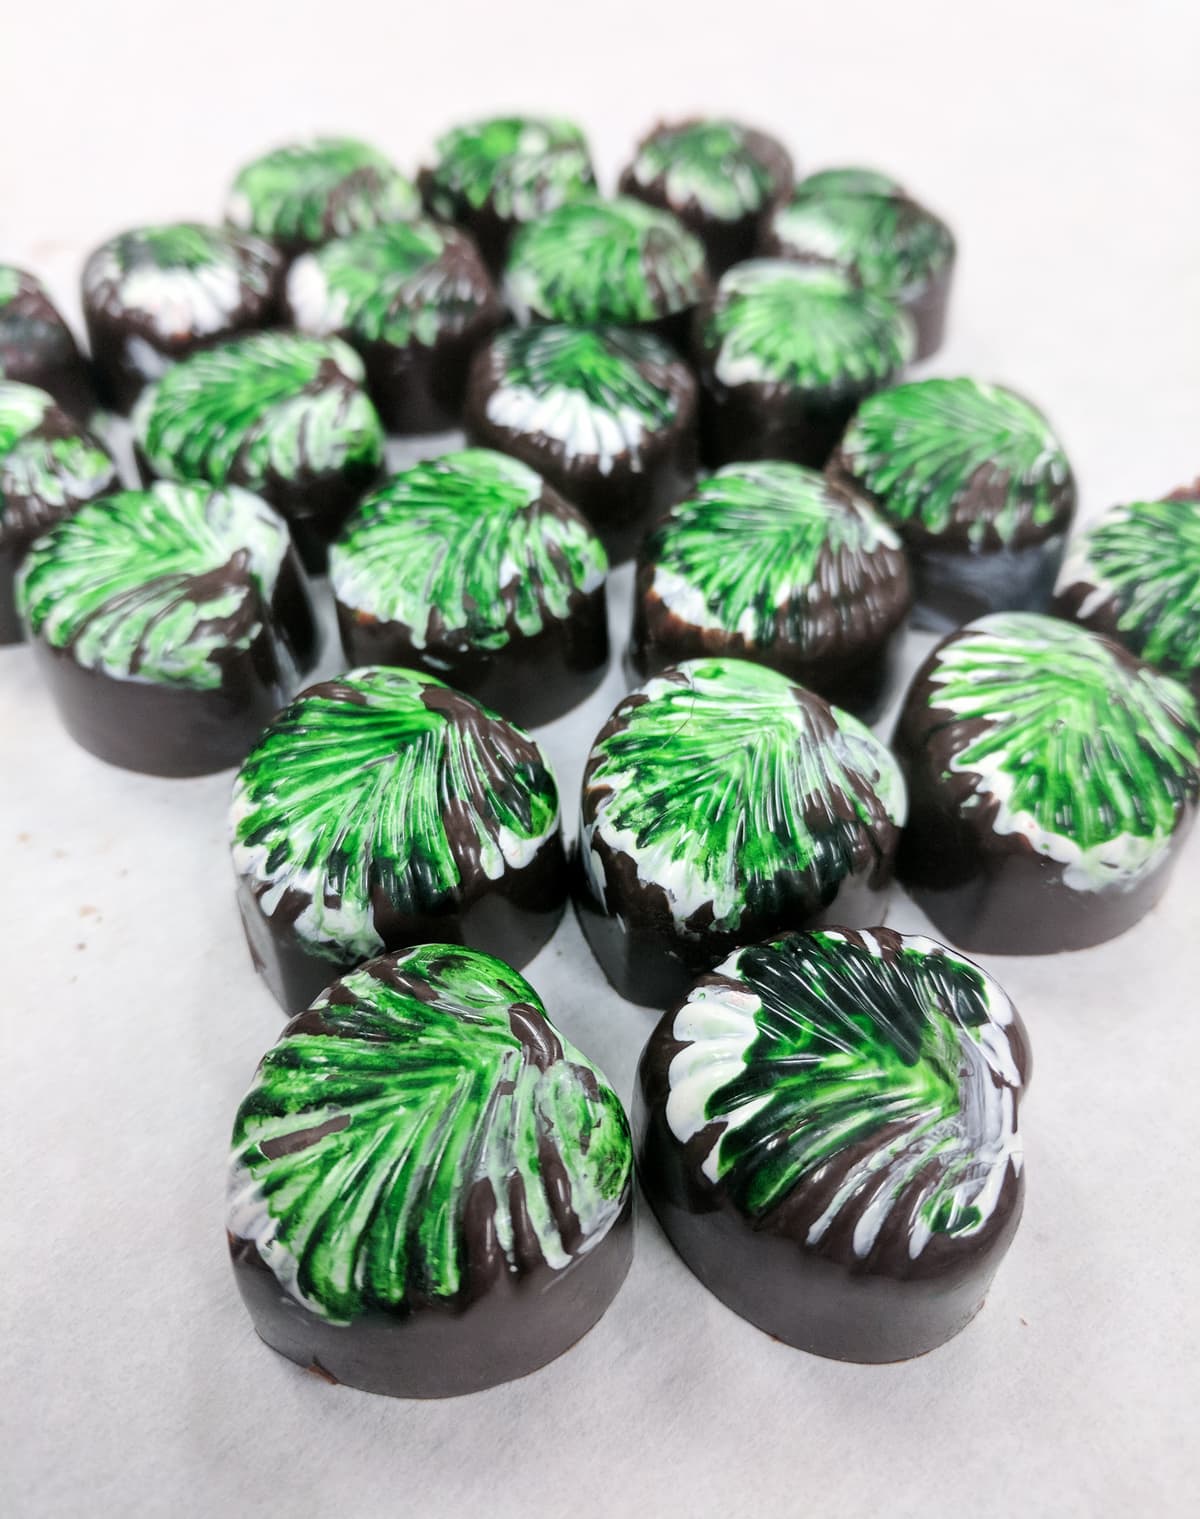 Bonbons with a leaf design on top